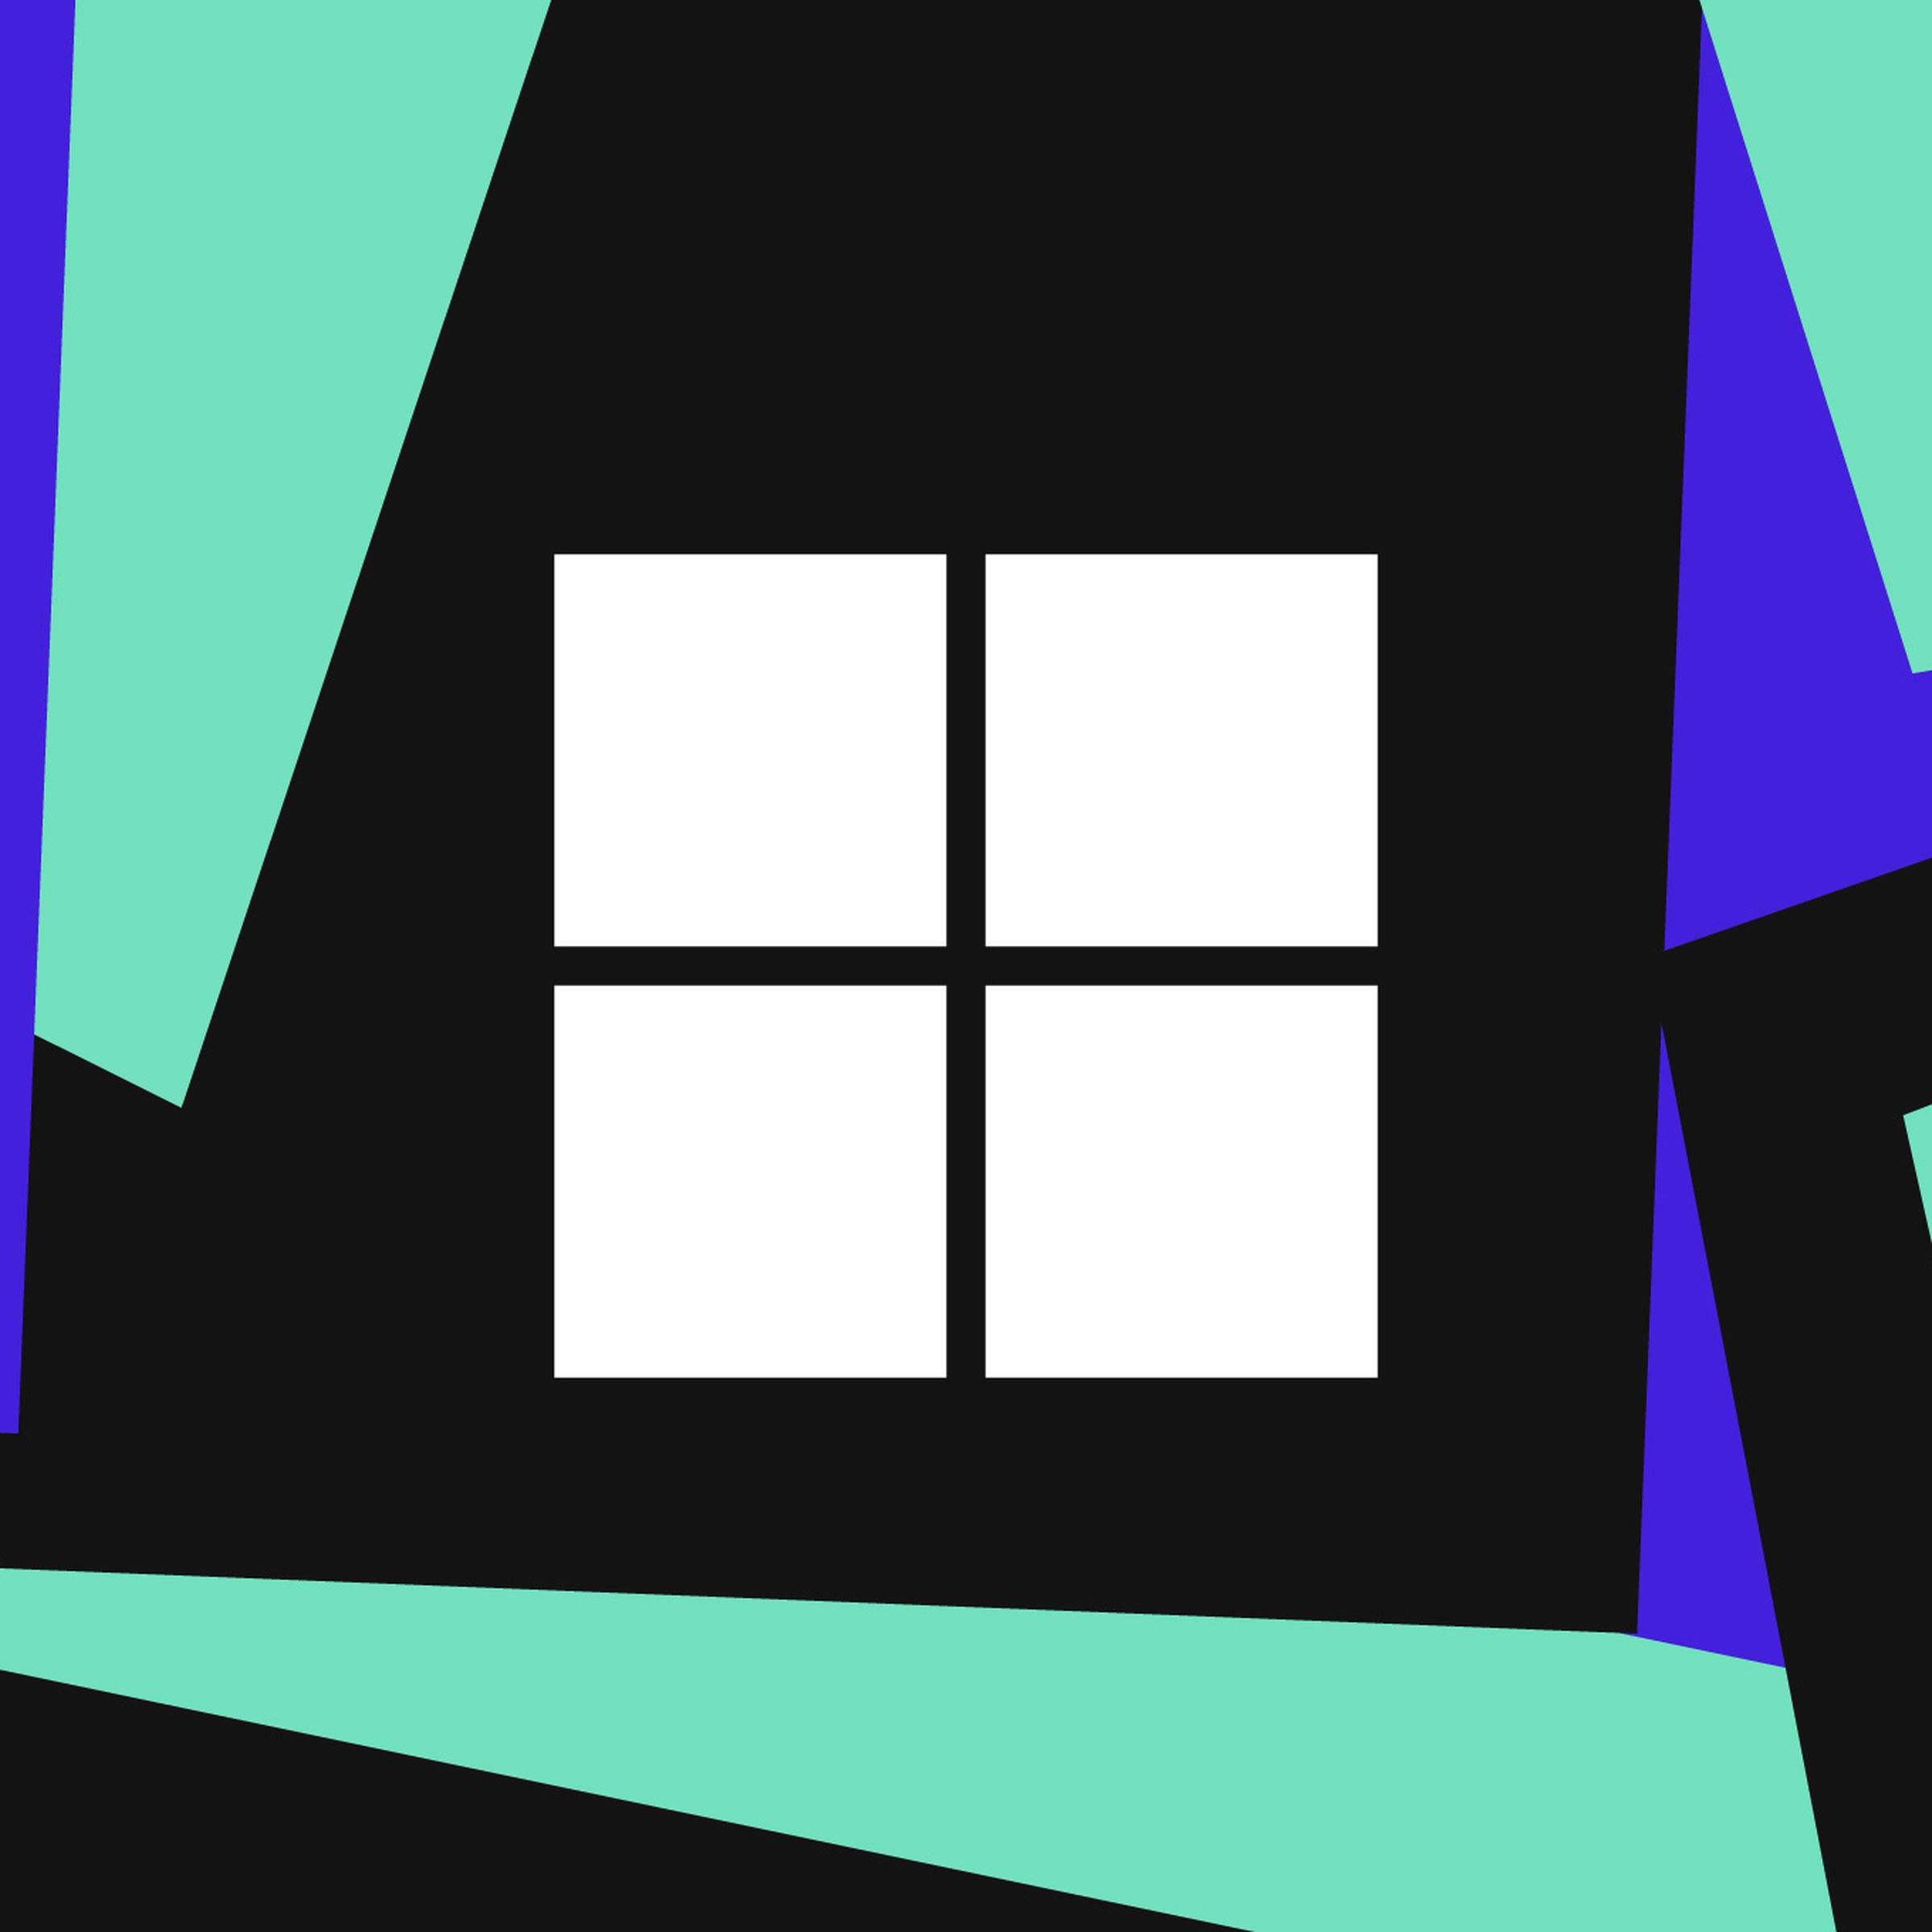 Illustration of Microsoft’s Windows logo